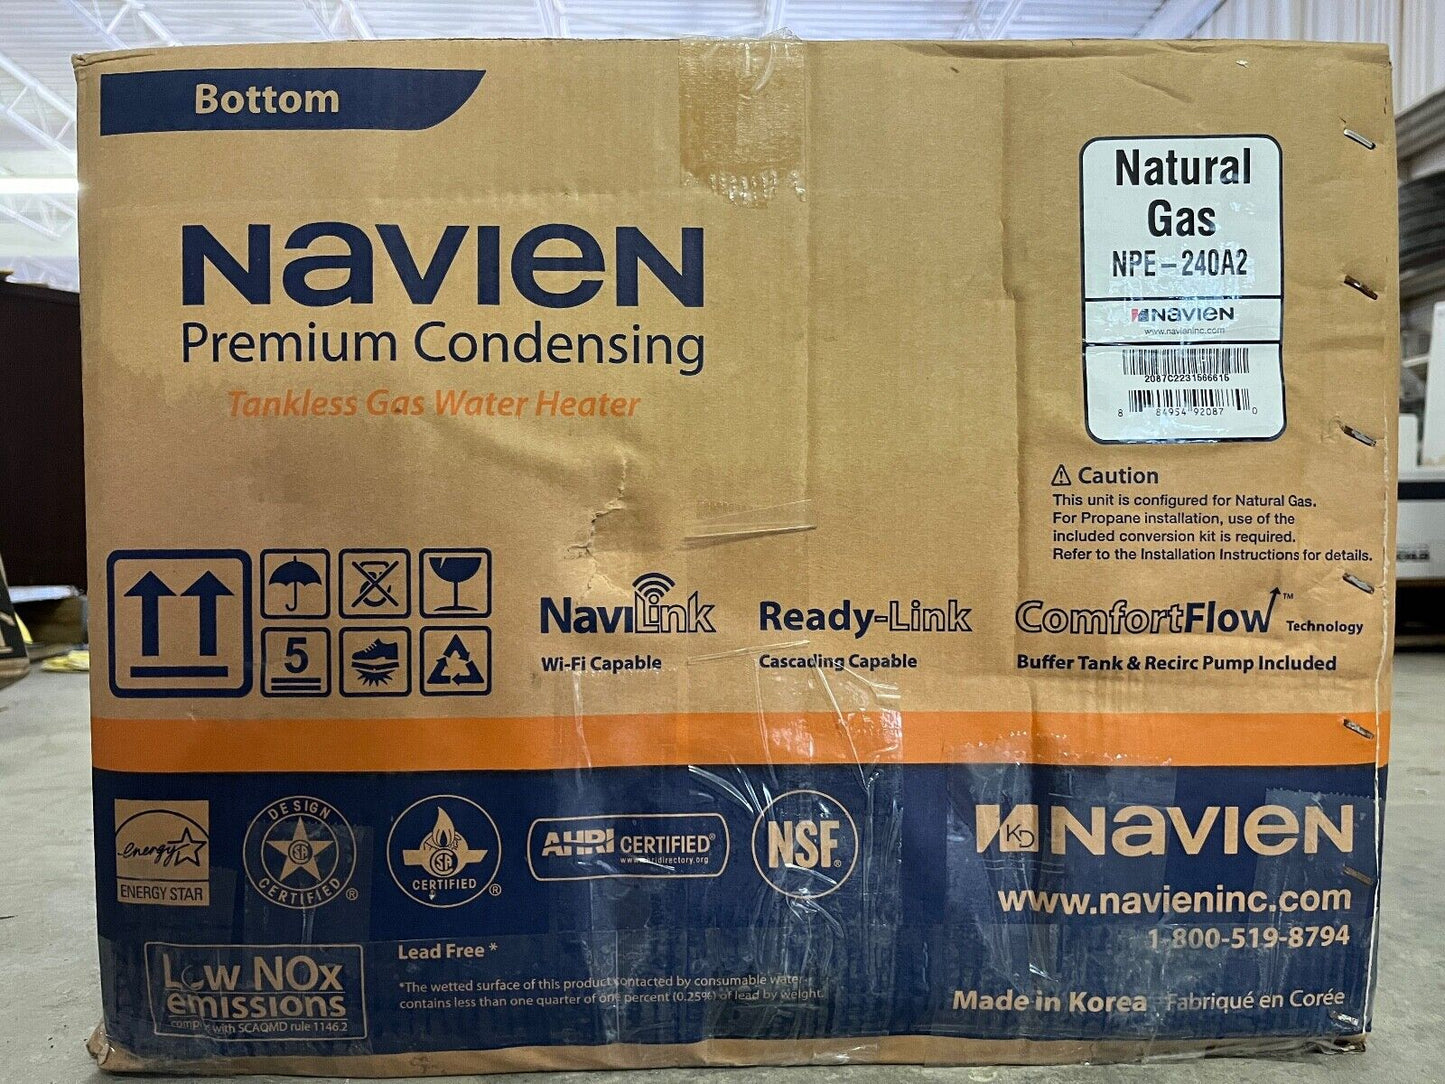 Navien Tankless Gas Water Heater NPE-240A2 High Efficiency Condensing